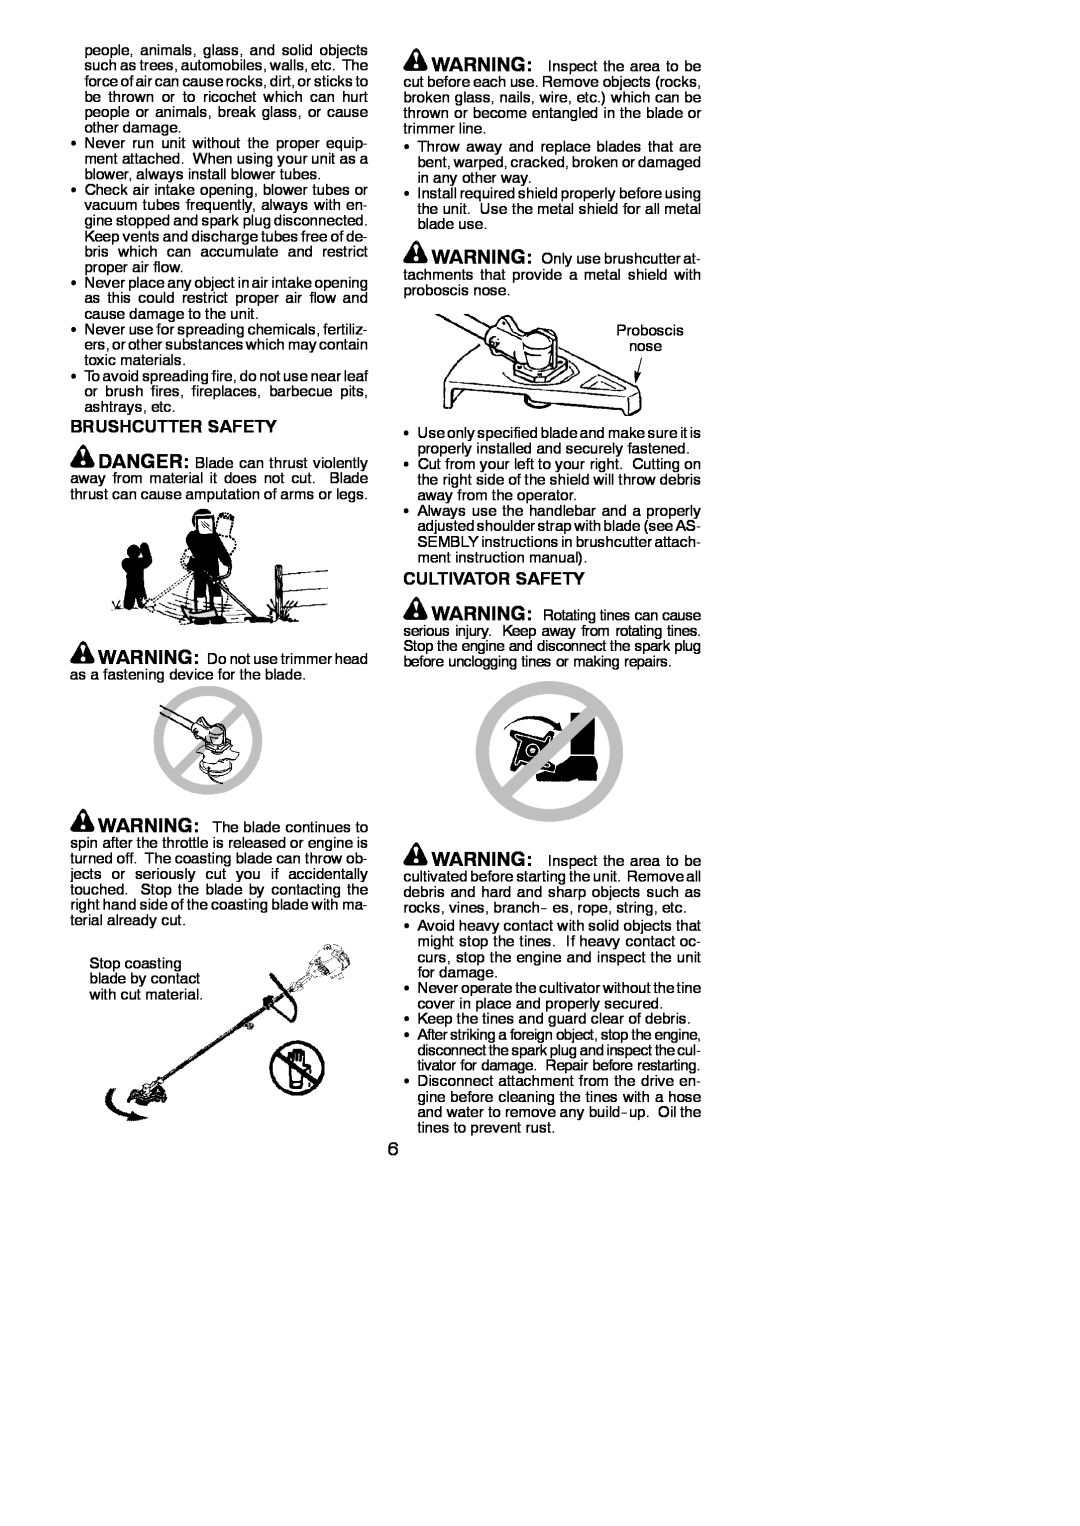 Poulan 530163735 instruction manual Brushcutter Safety, Cultivator Safety 